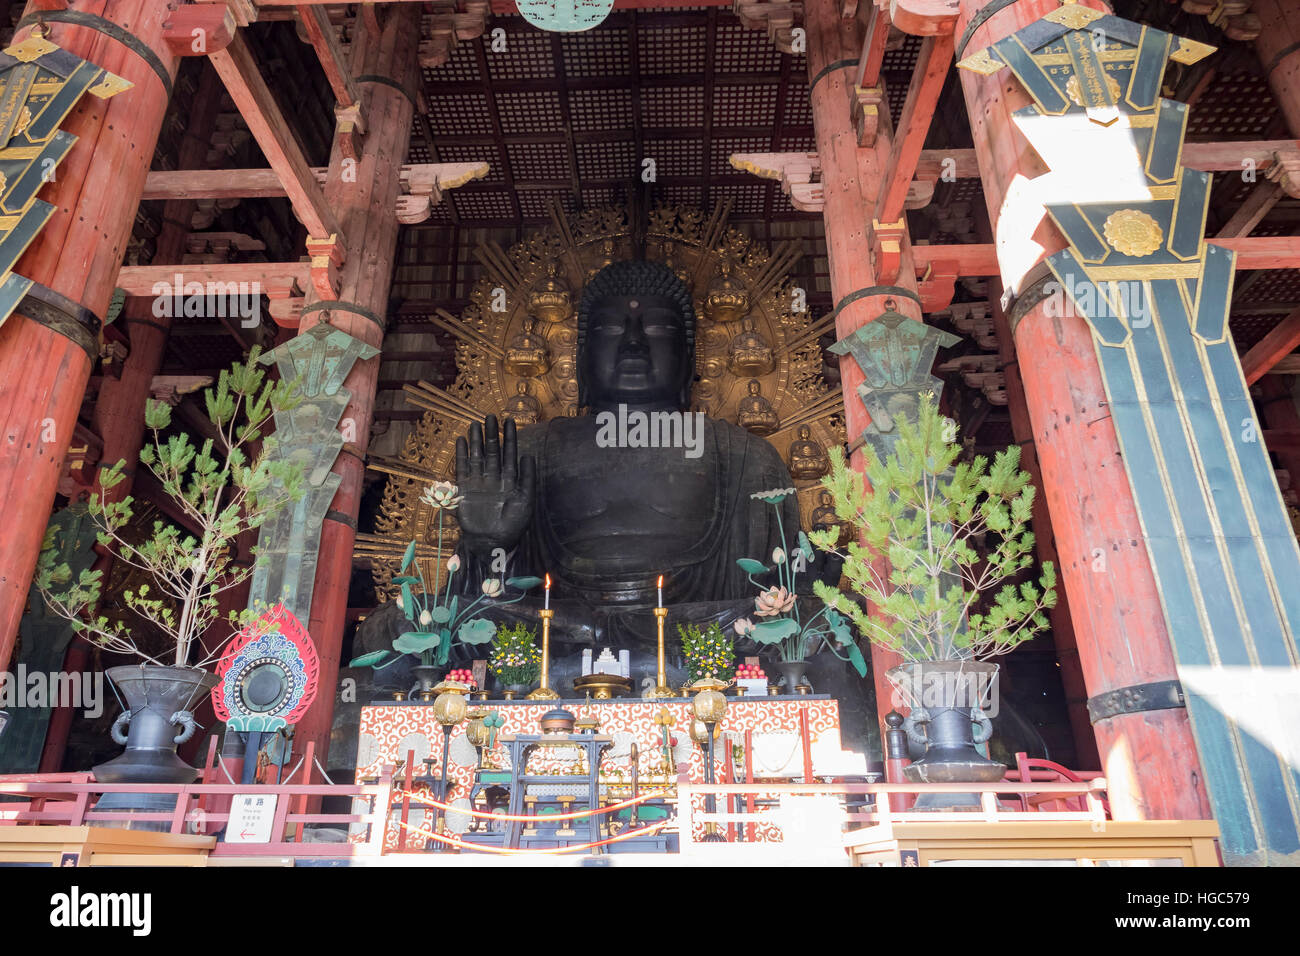 Nara, DEC 17: Interior of the historical Horyu Ji (Temple of the Flourishing Law) on DEC 17, 2016 at Nara, Japan Stock Photo